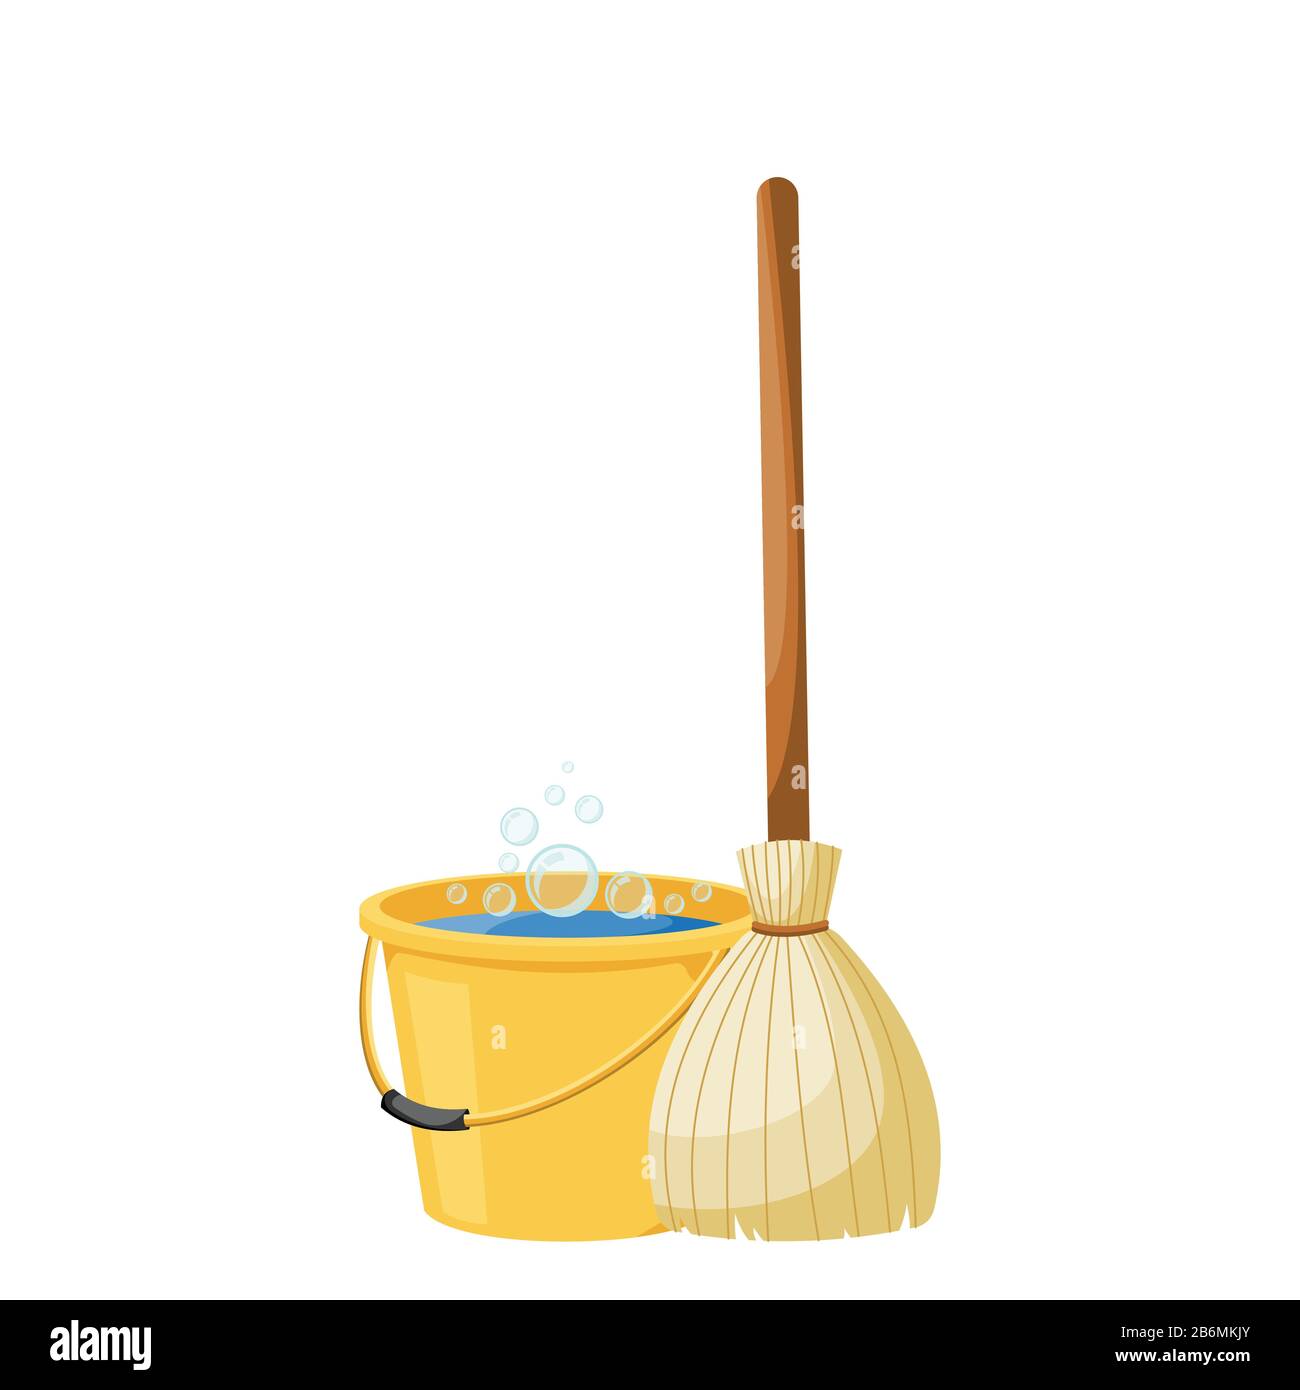 https://c8.alamy.com/comp/2B6MKJY/cartoon-broom-with-yellow-plastic-bucket-vector-illustration-2B6MKJY.jpg